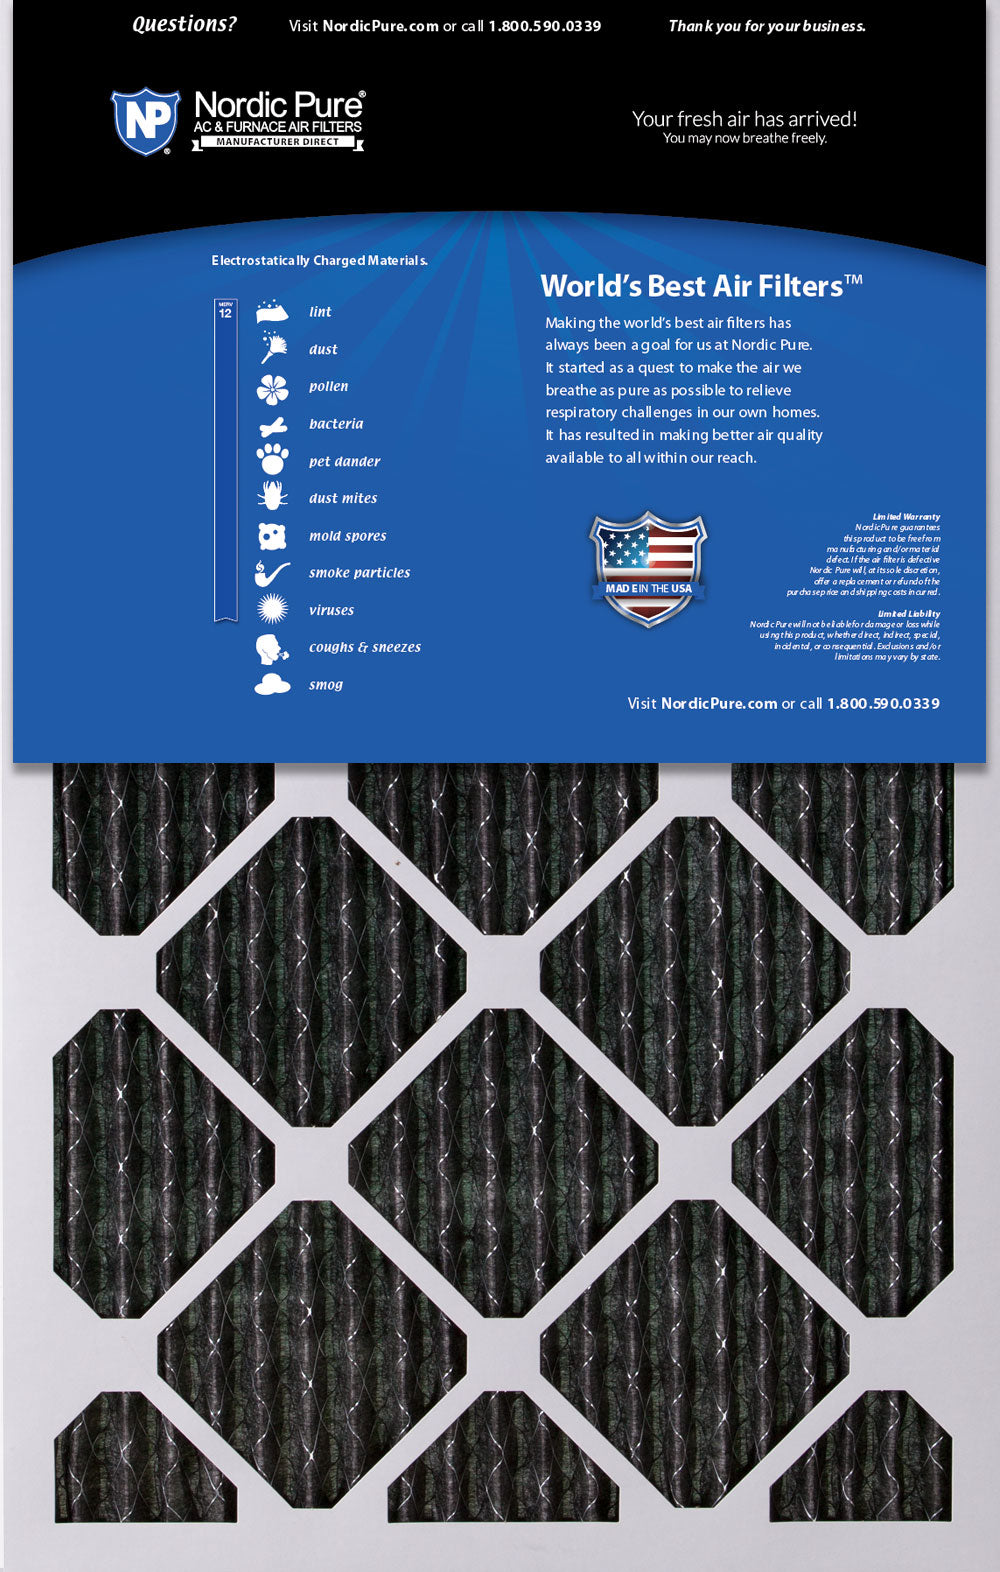 6x12x1 Exact MERV 12 Plus Carbon AC Furnace Filters 6 Pack